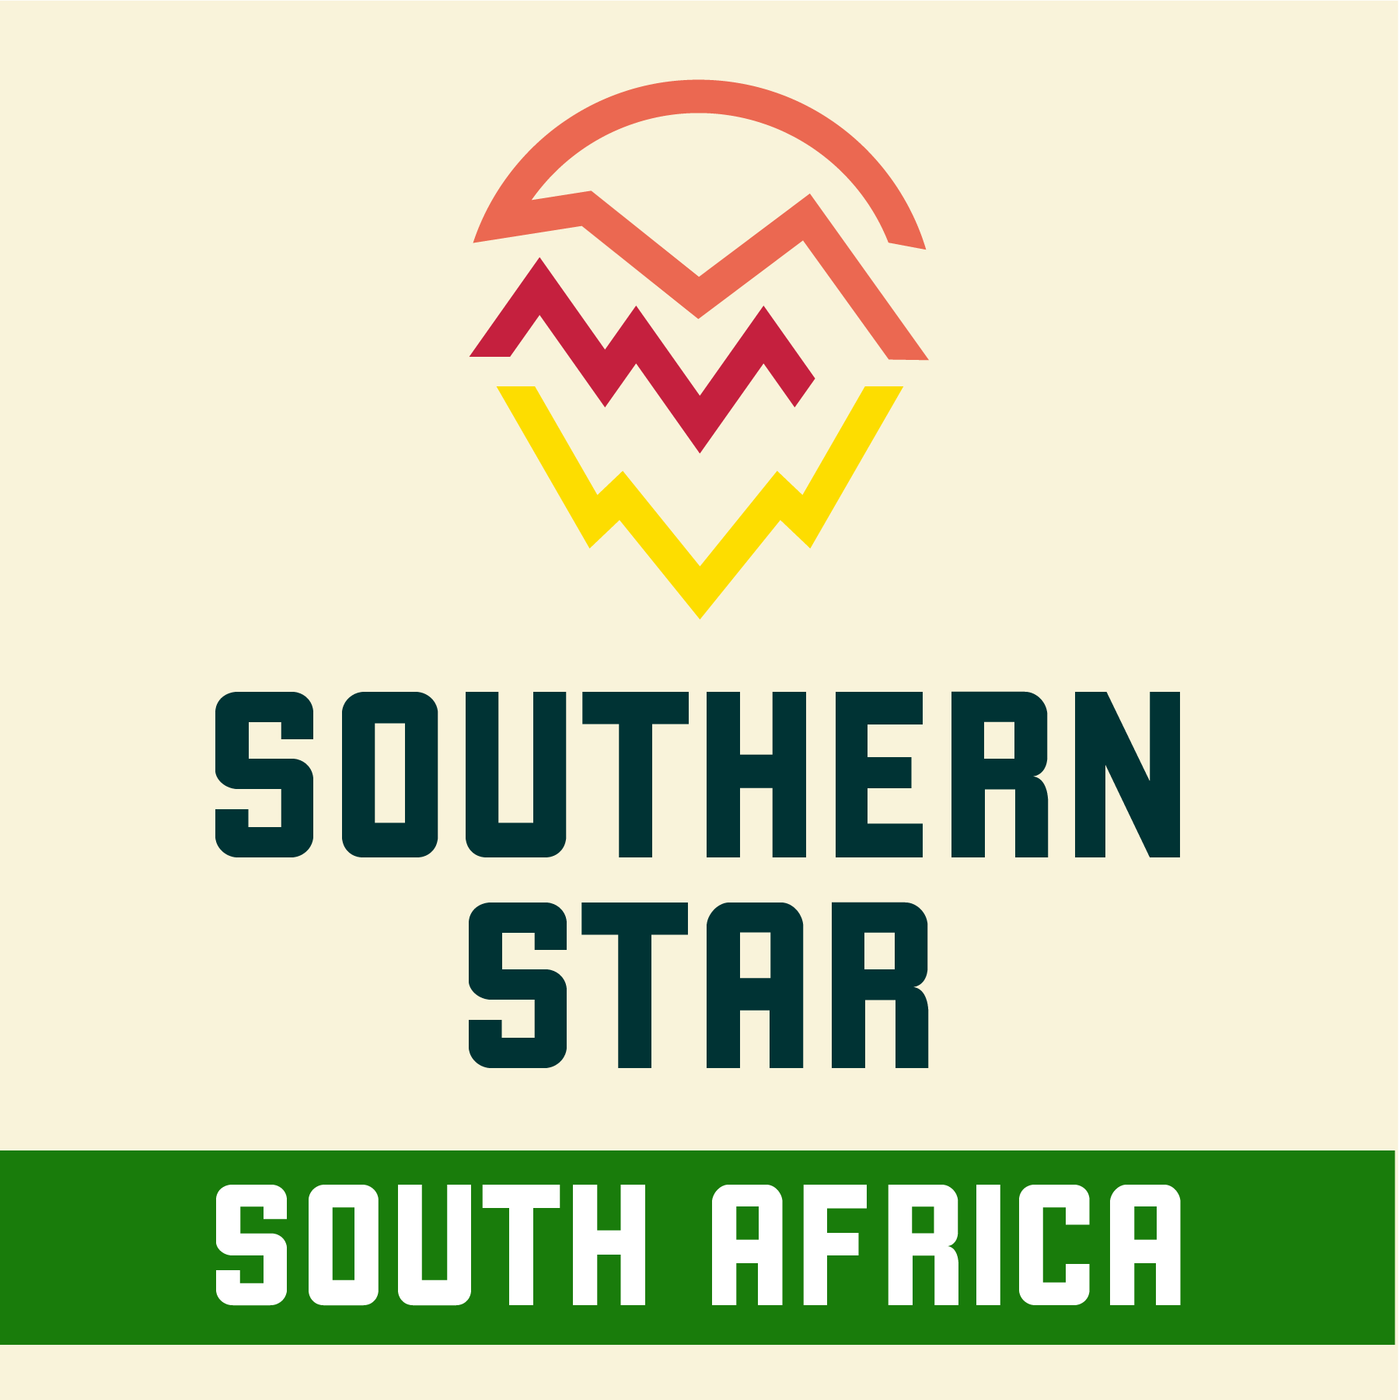 southernstar-africa